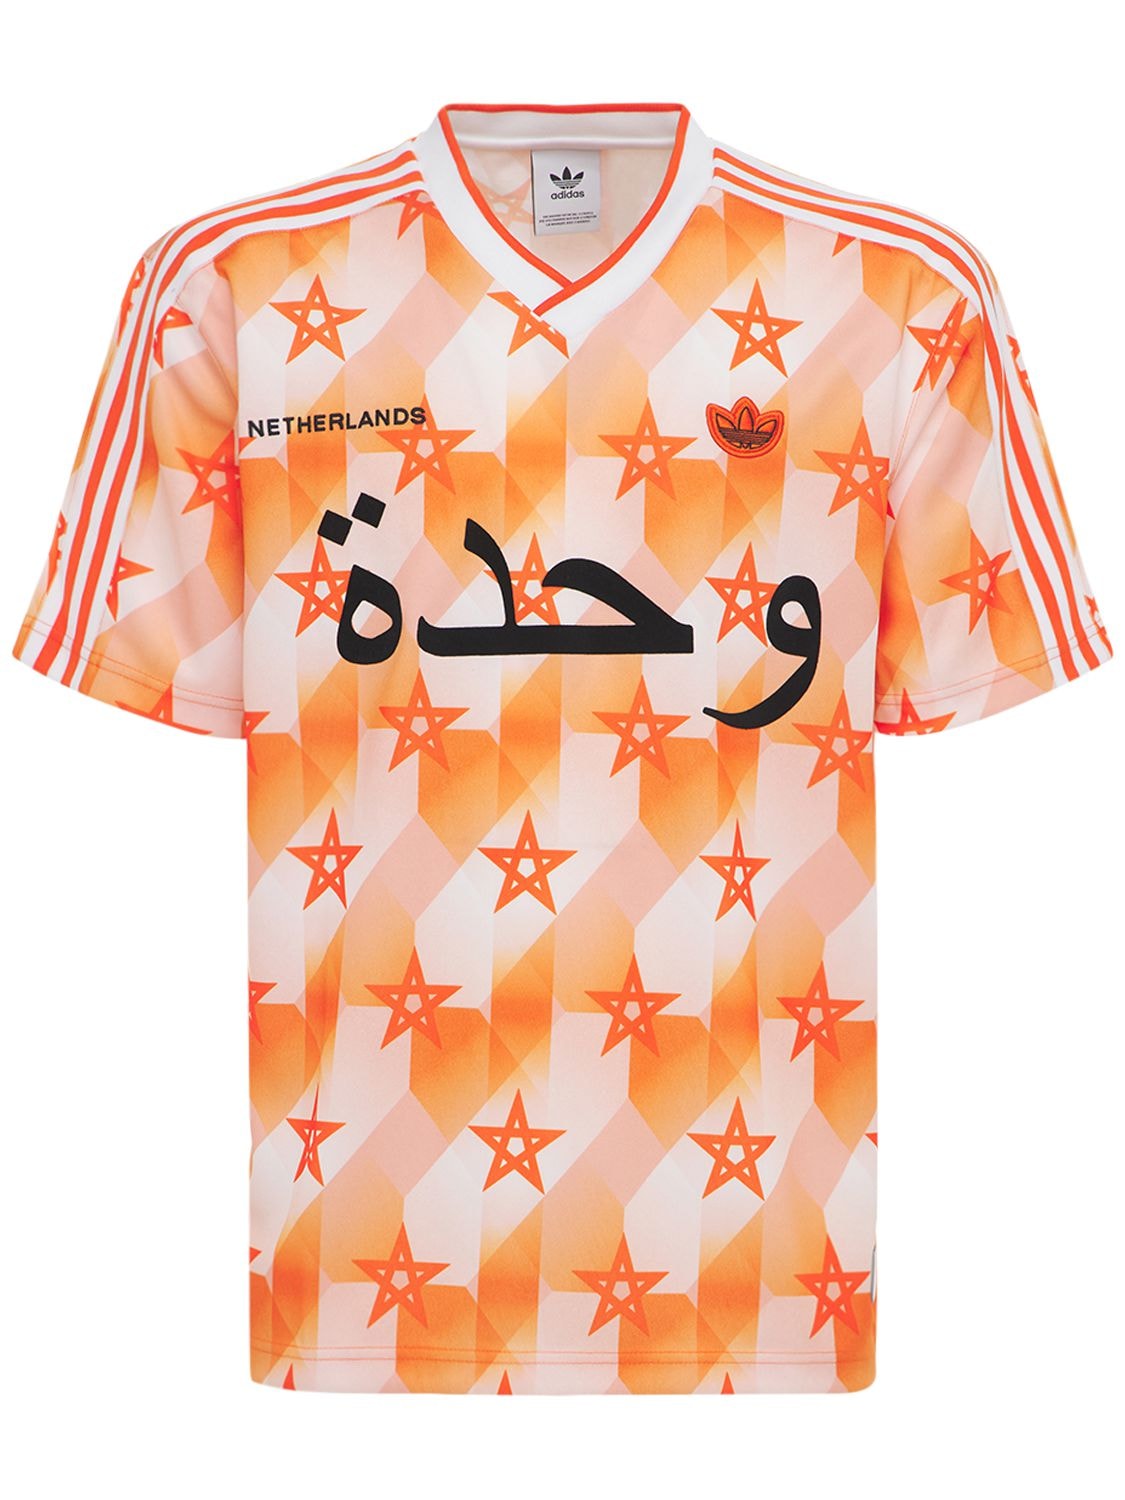 mist Eerder fax Adidas Originals Netherlands Jersey In Orange | ModeSens